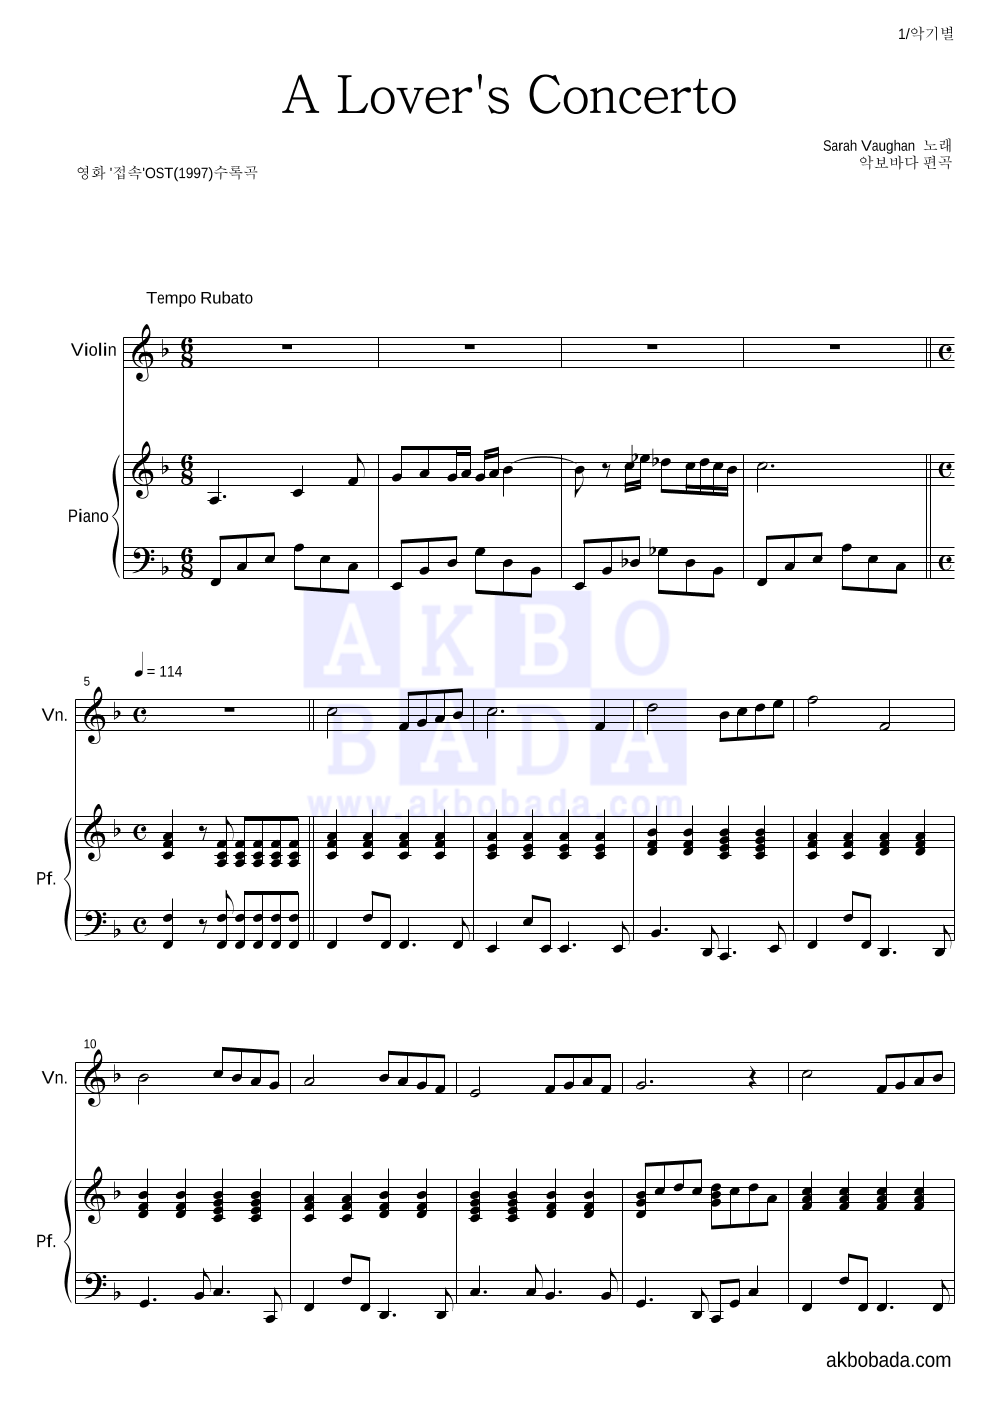 Sarah Vaughan - A Lover's Concerto 바이올린&피아노 악보 